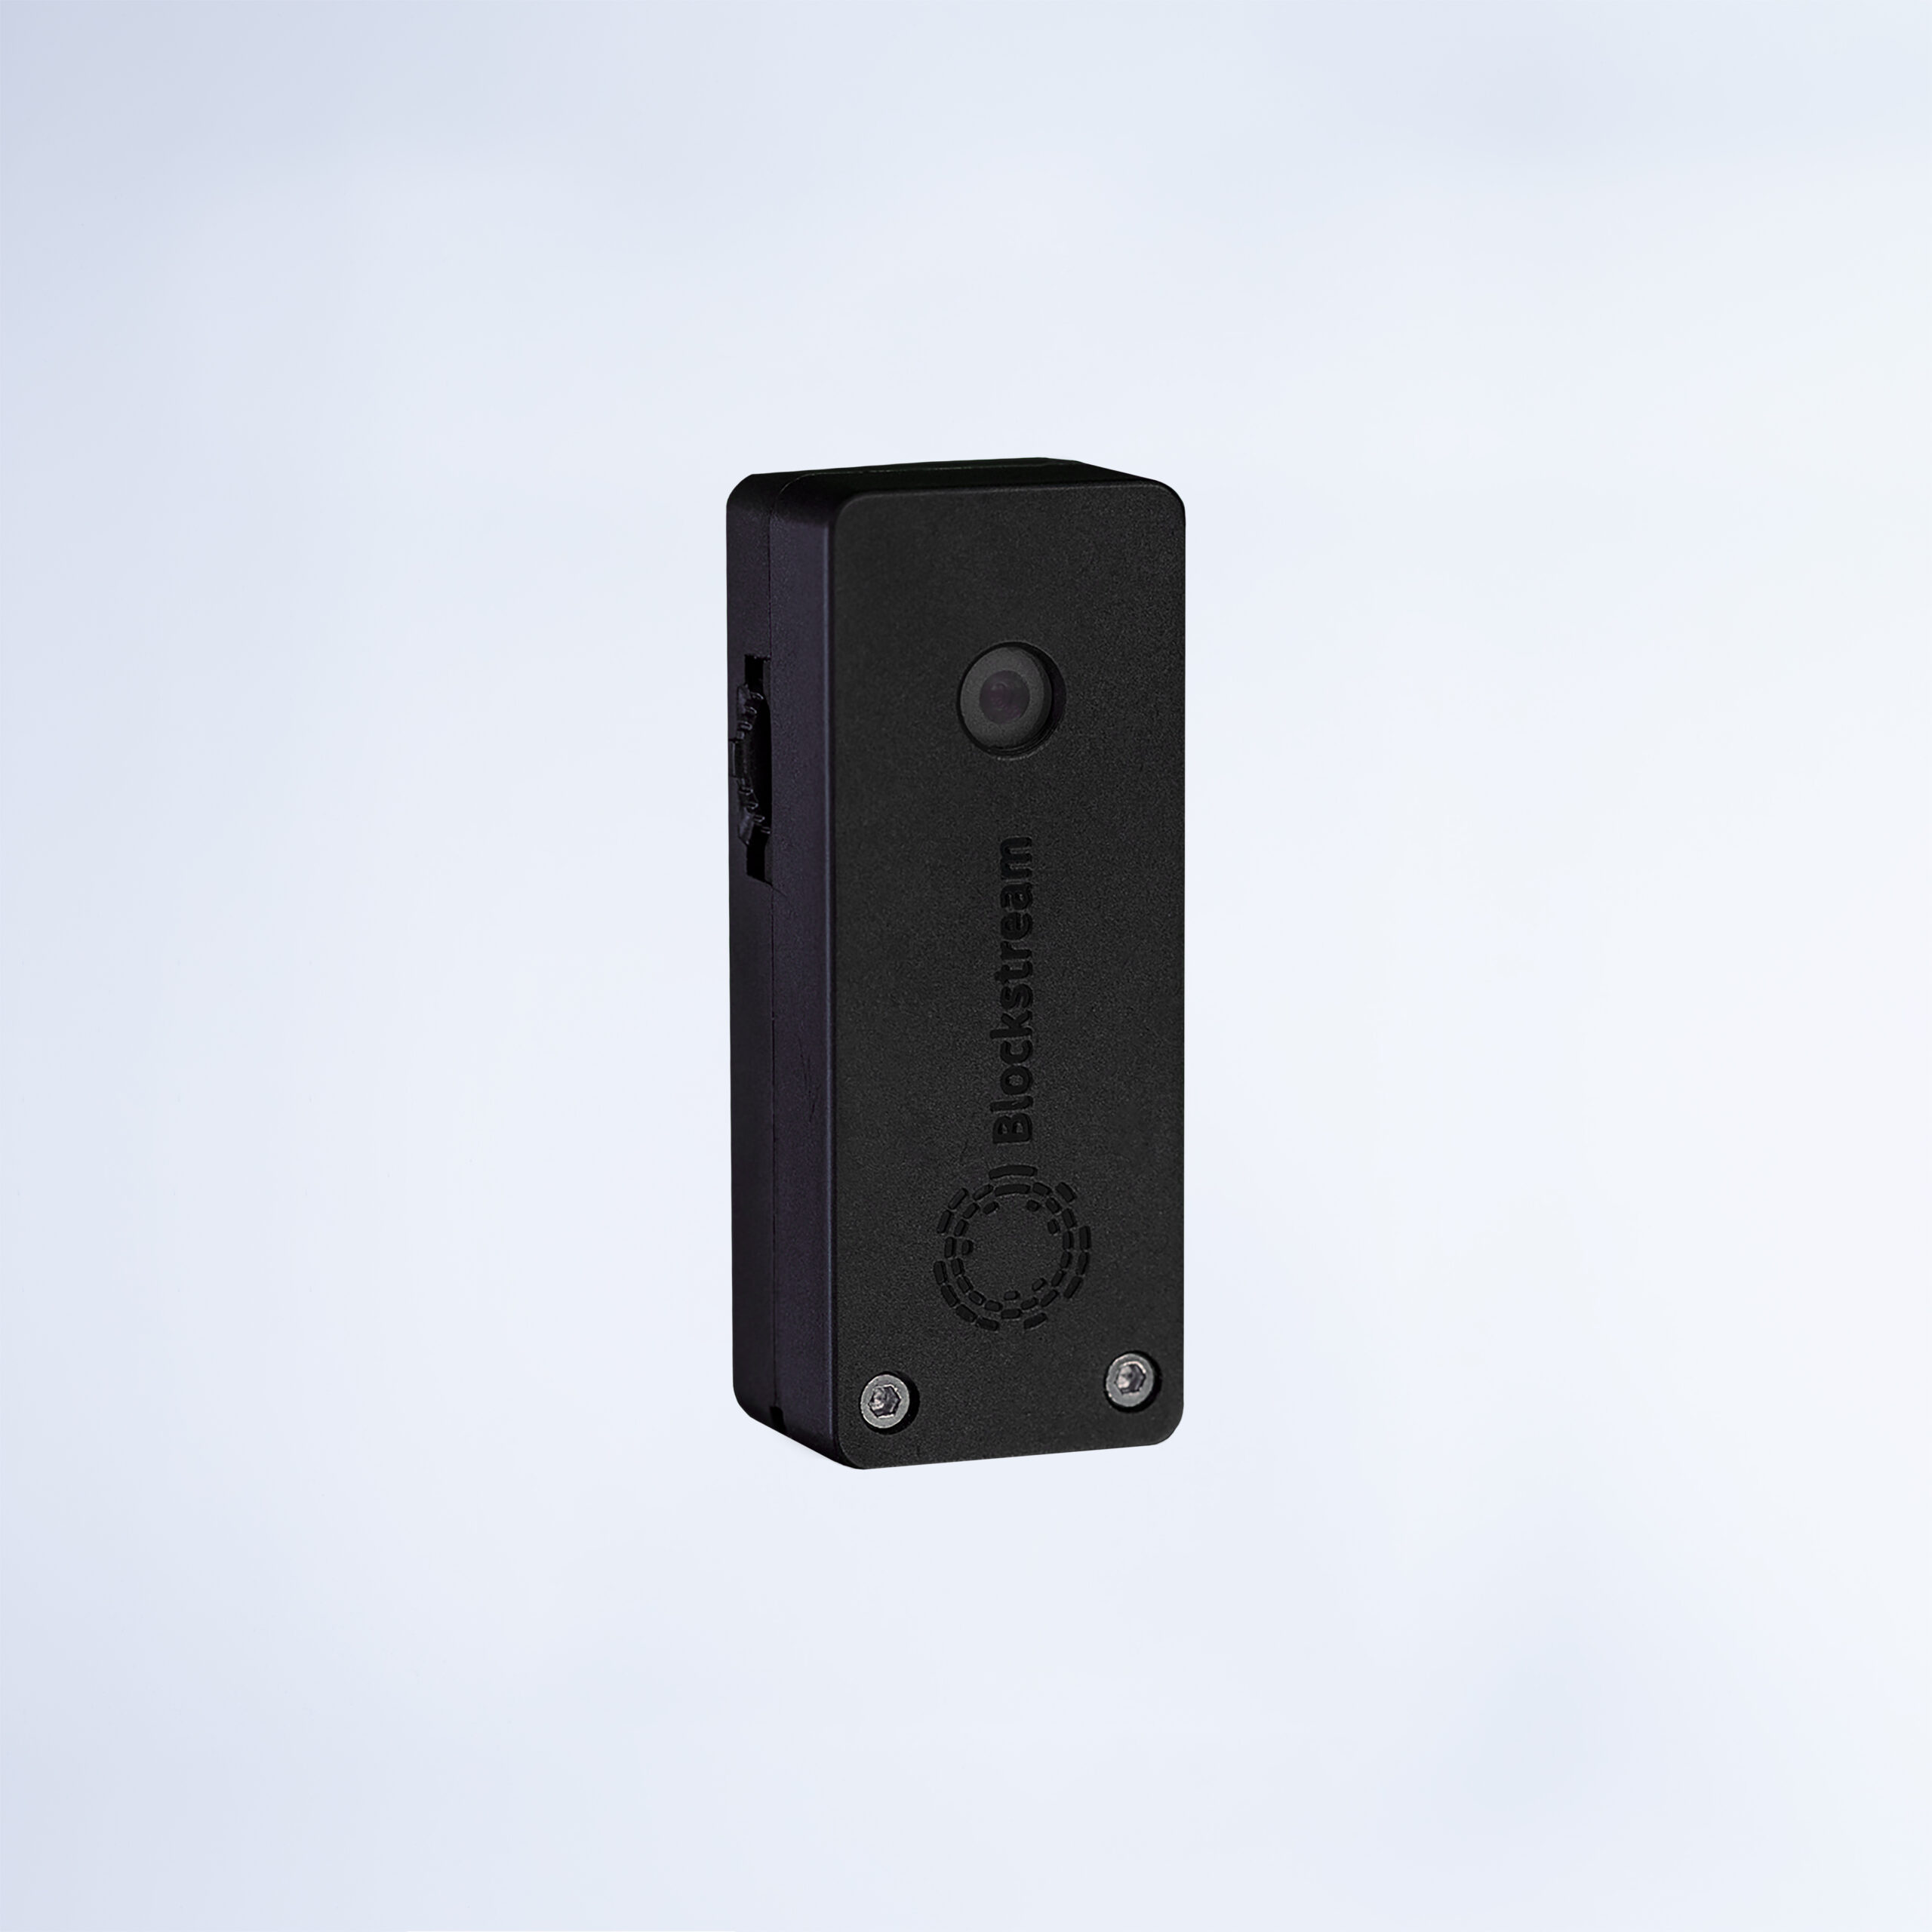  Blockstream Jade - Bitcoin Hardware Wallet - Camera - Bluetooth  - USB-C - 240 mAh Battery - Secure Your Bitcoin Offline : Electronics